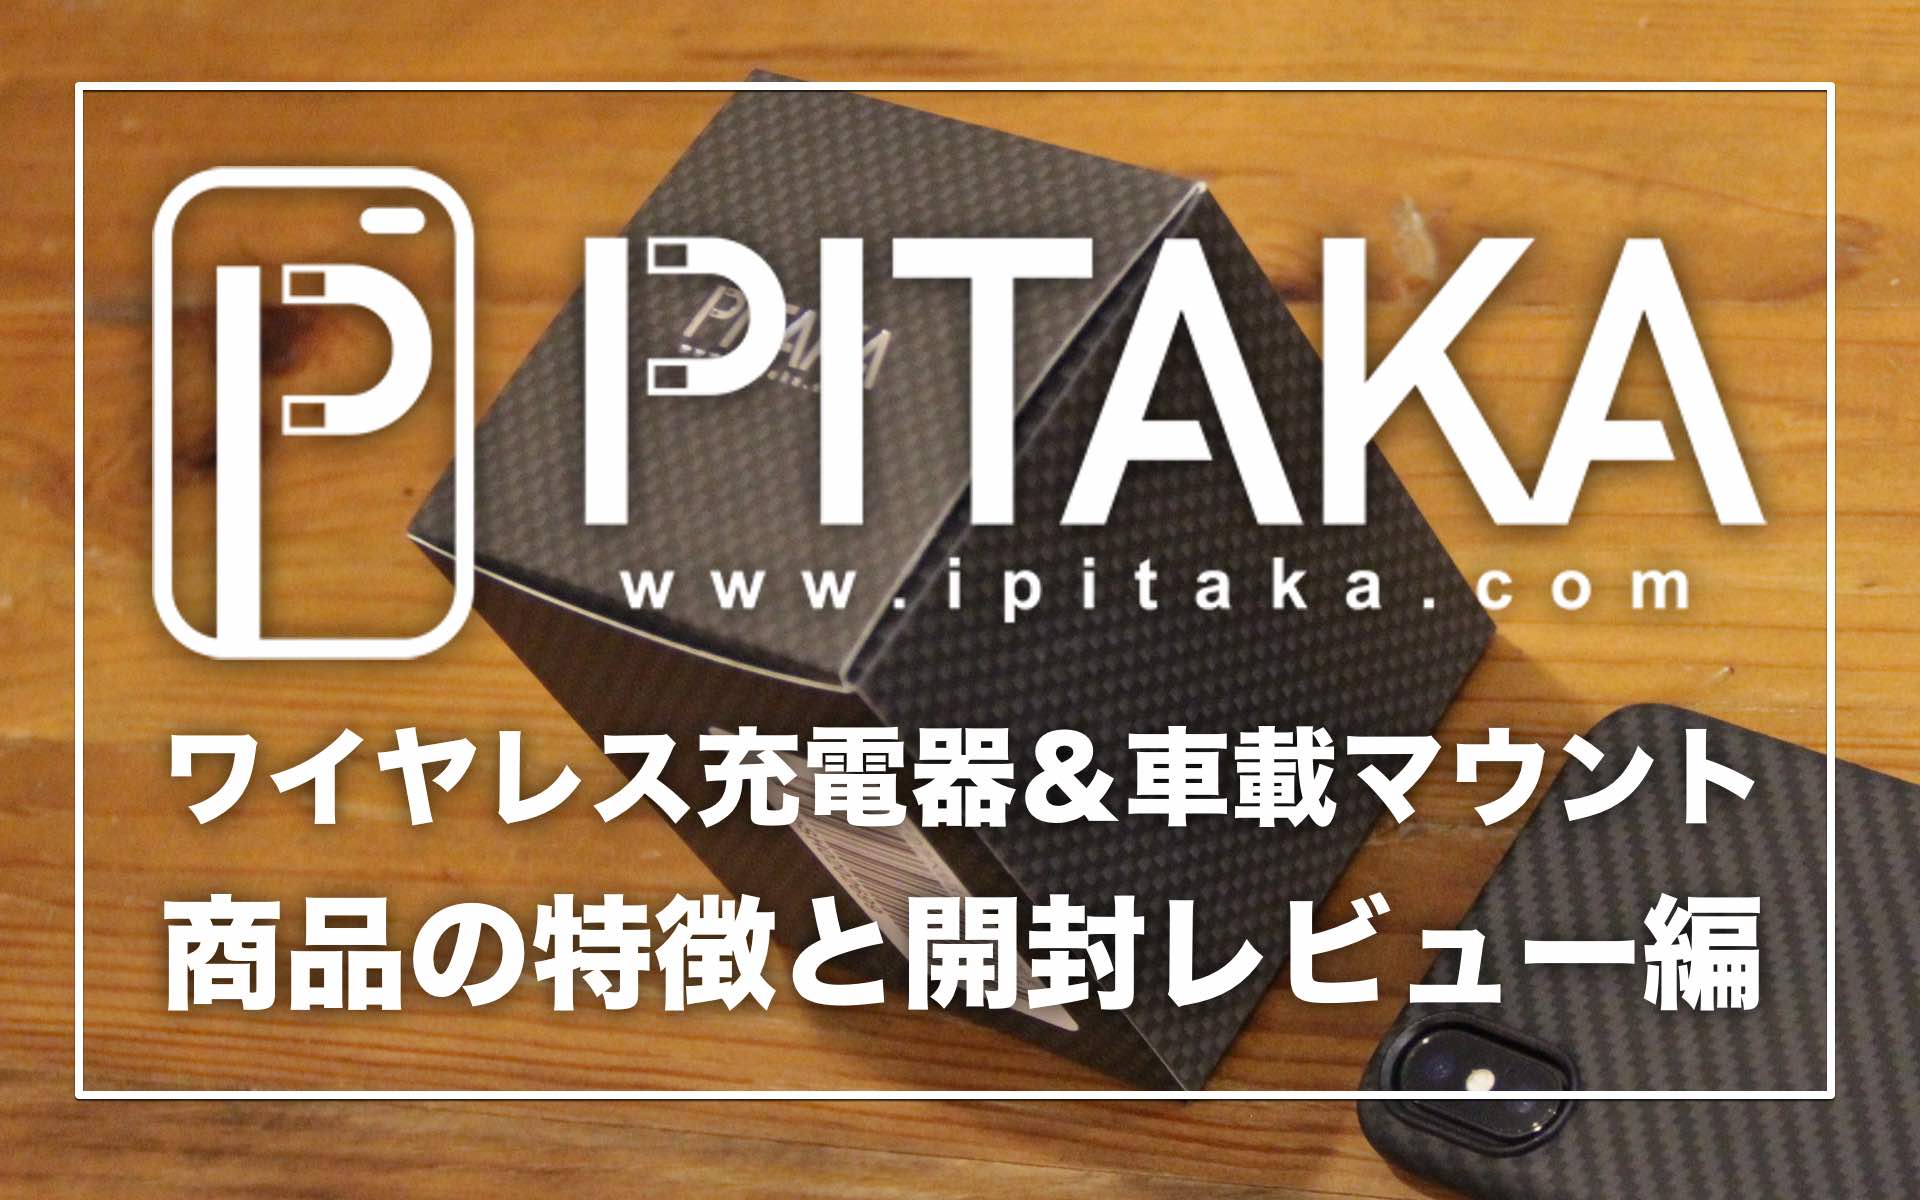 PITAKA ワイヤレス充電器＆車載マウント記事のアイキャッチ